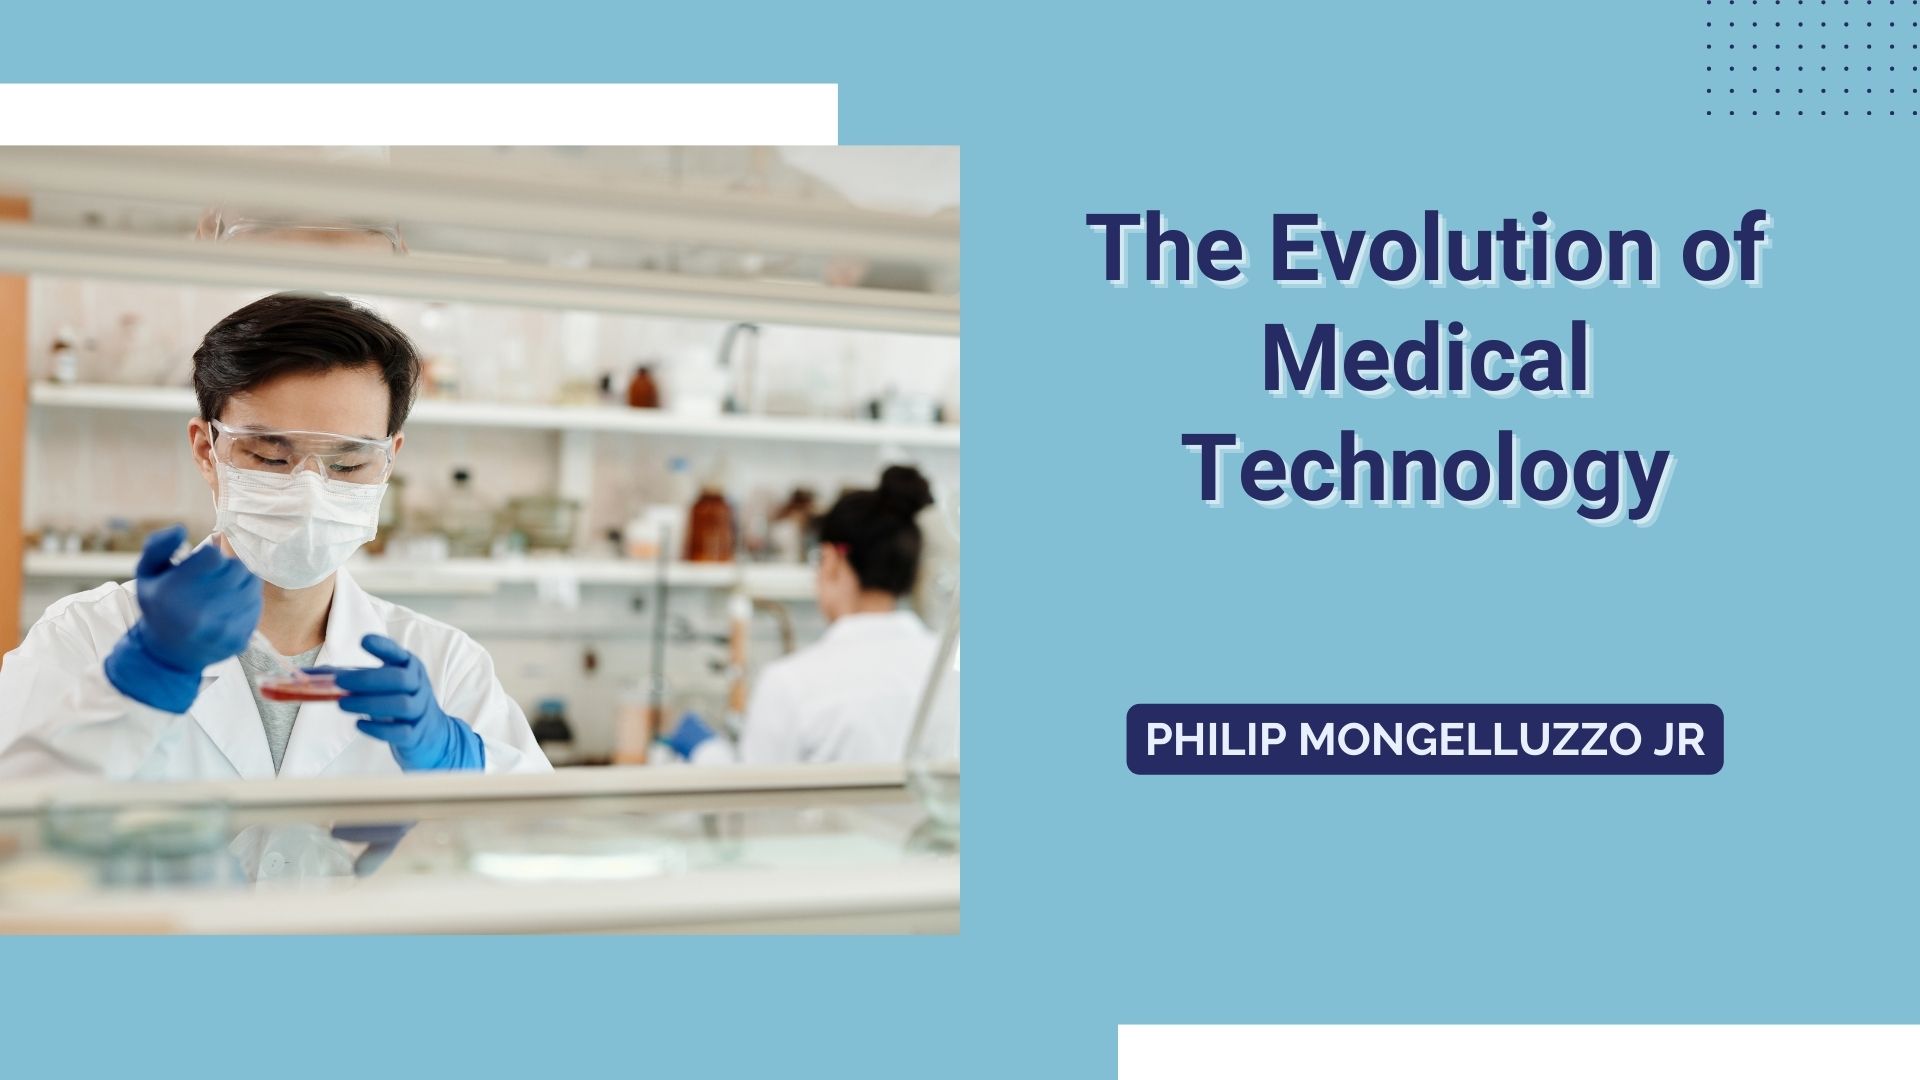 The Evolution of
Medical
Technology

 

PHILIP MONGELLUZZO JR